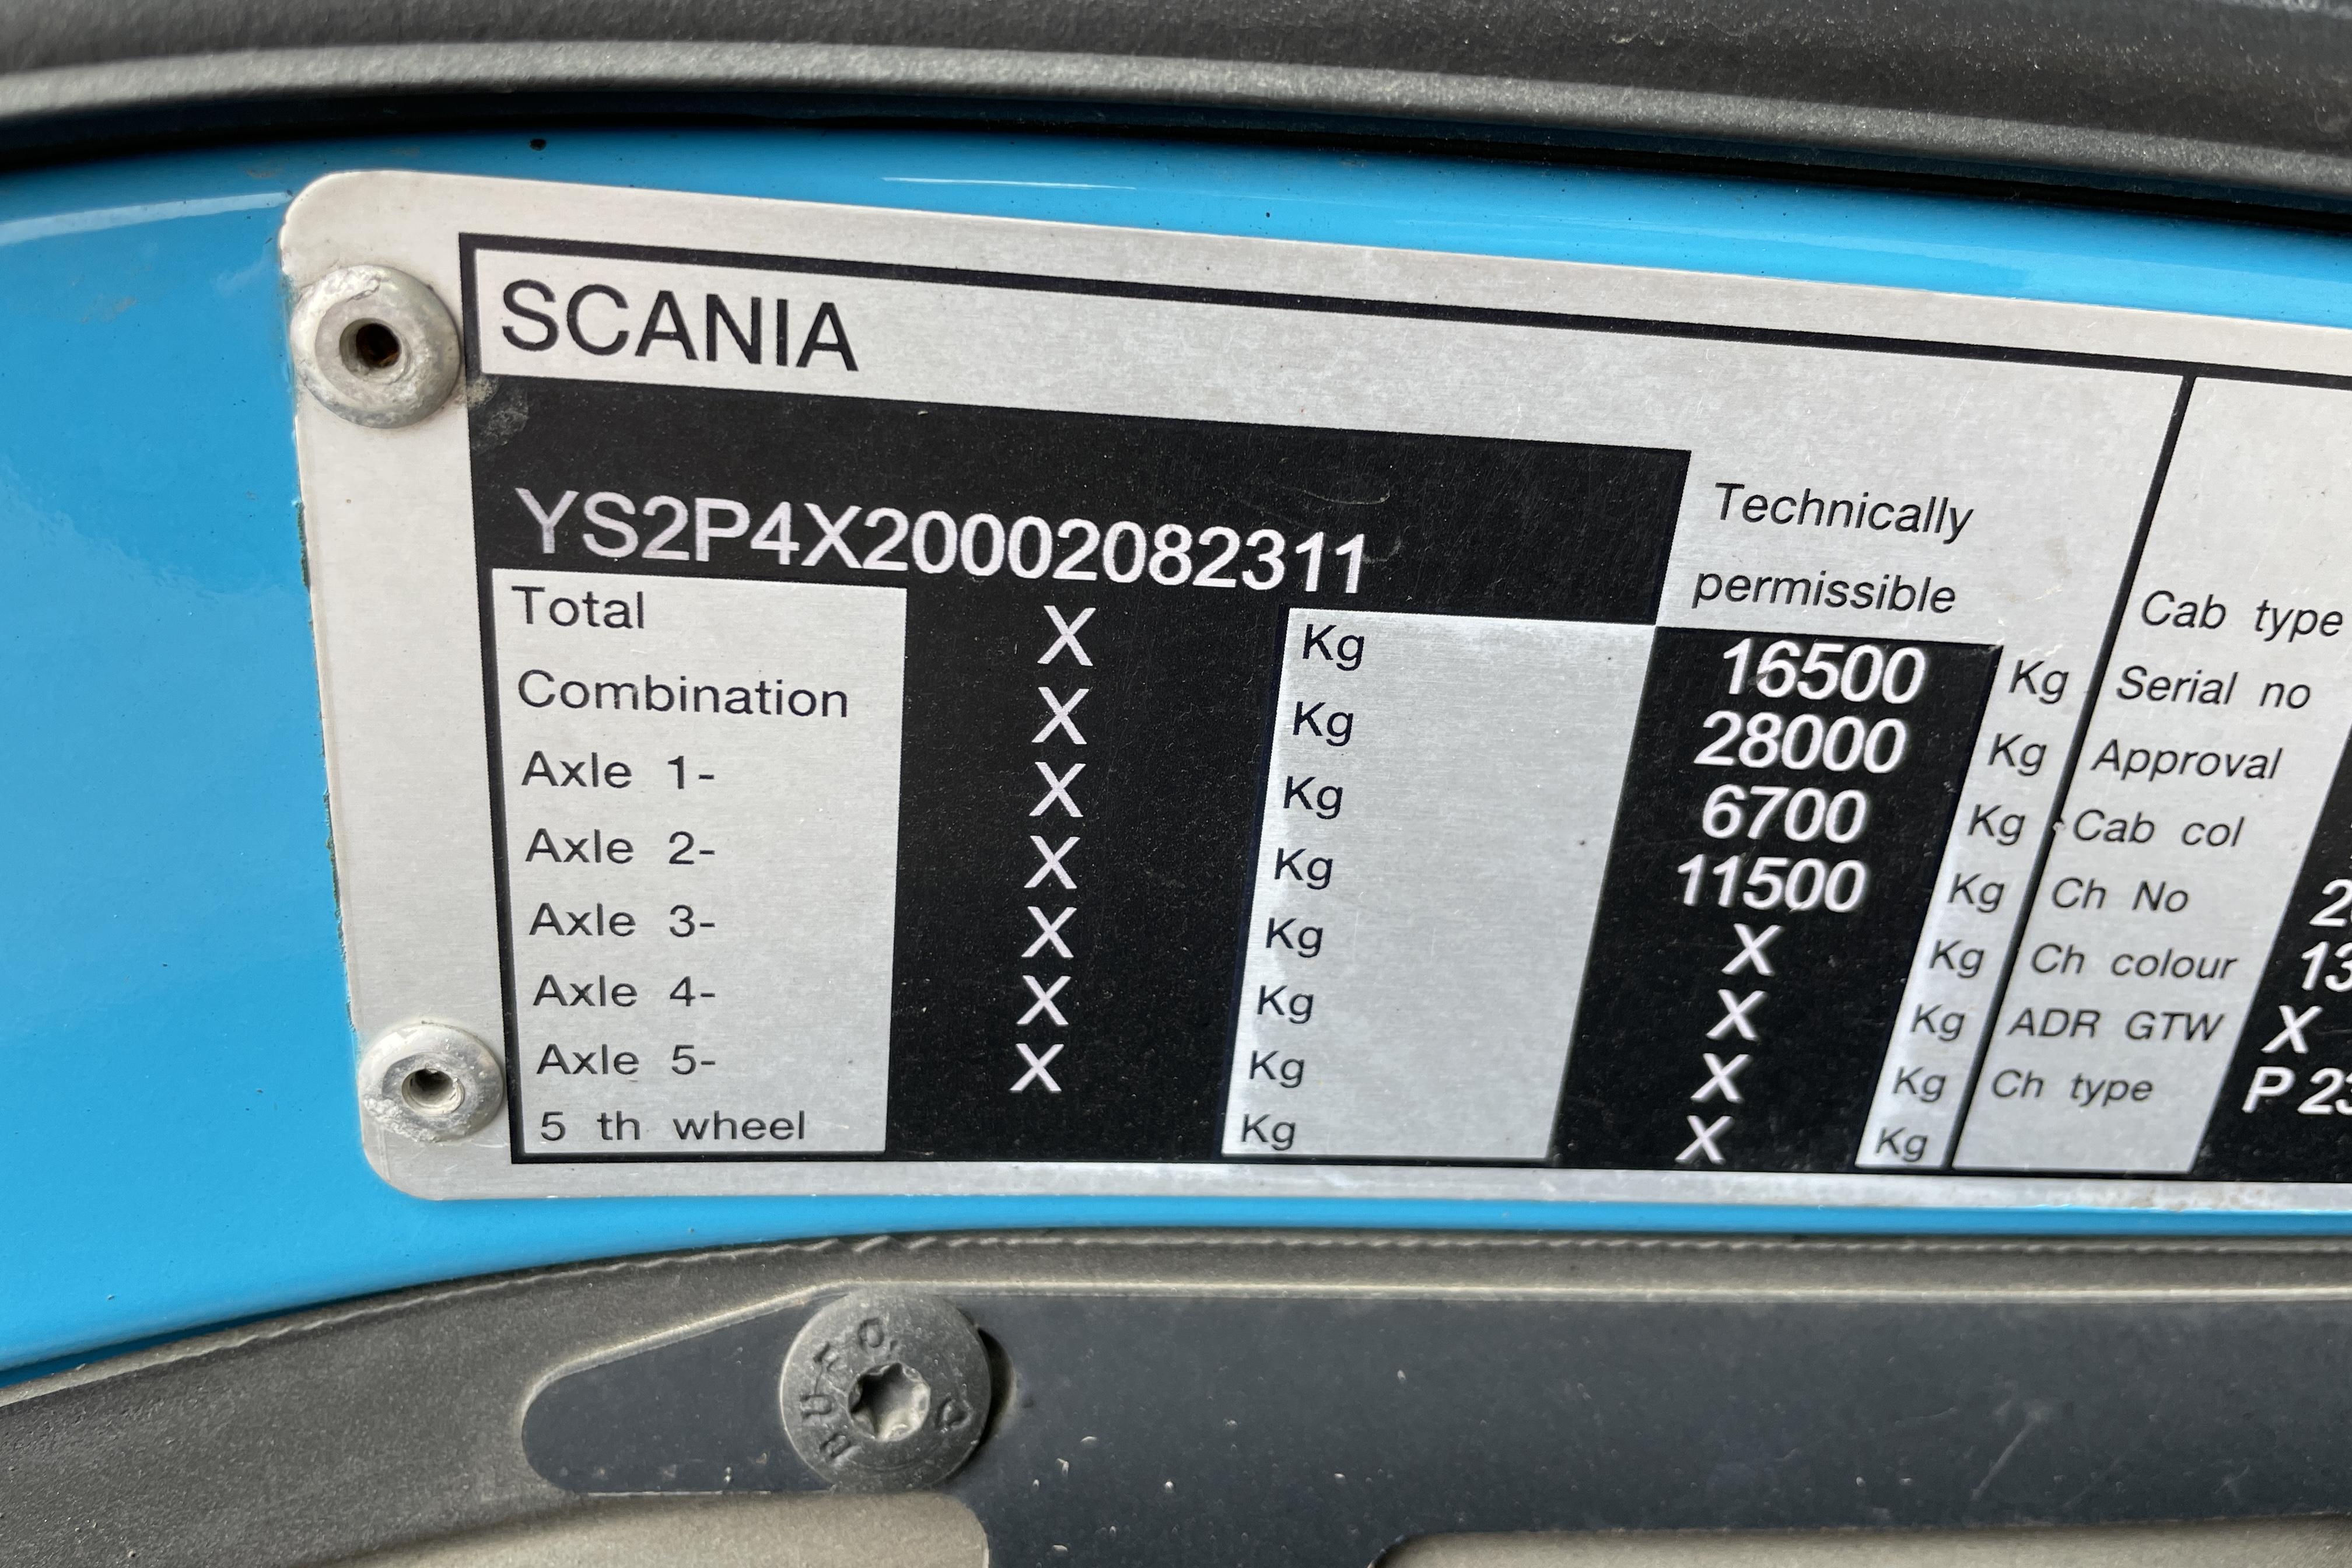 Scania P230 - 697 208 km - Automatic - blue - 2013